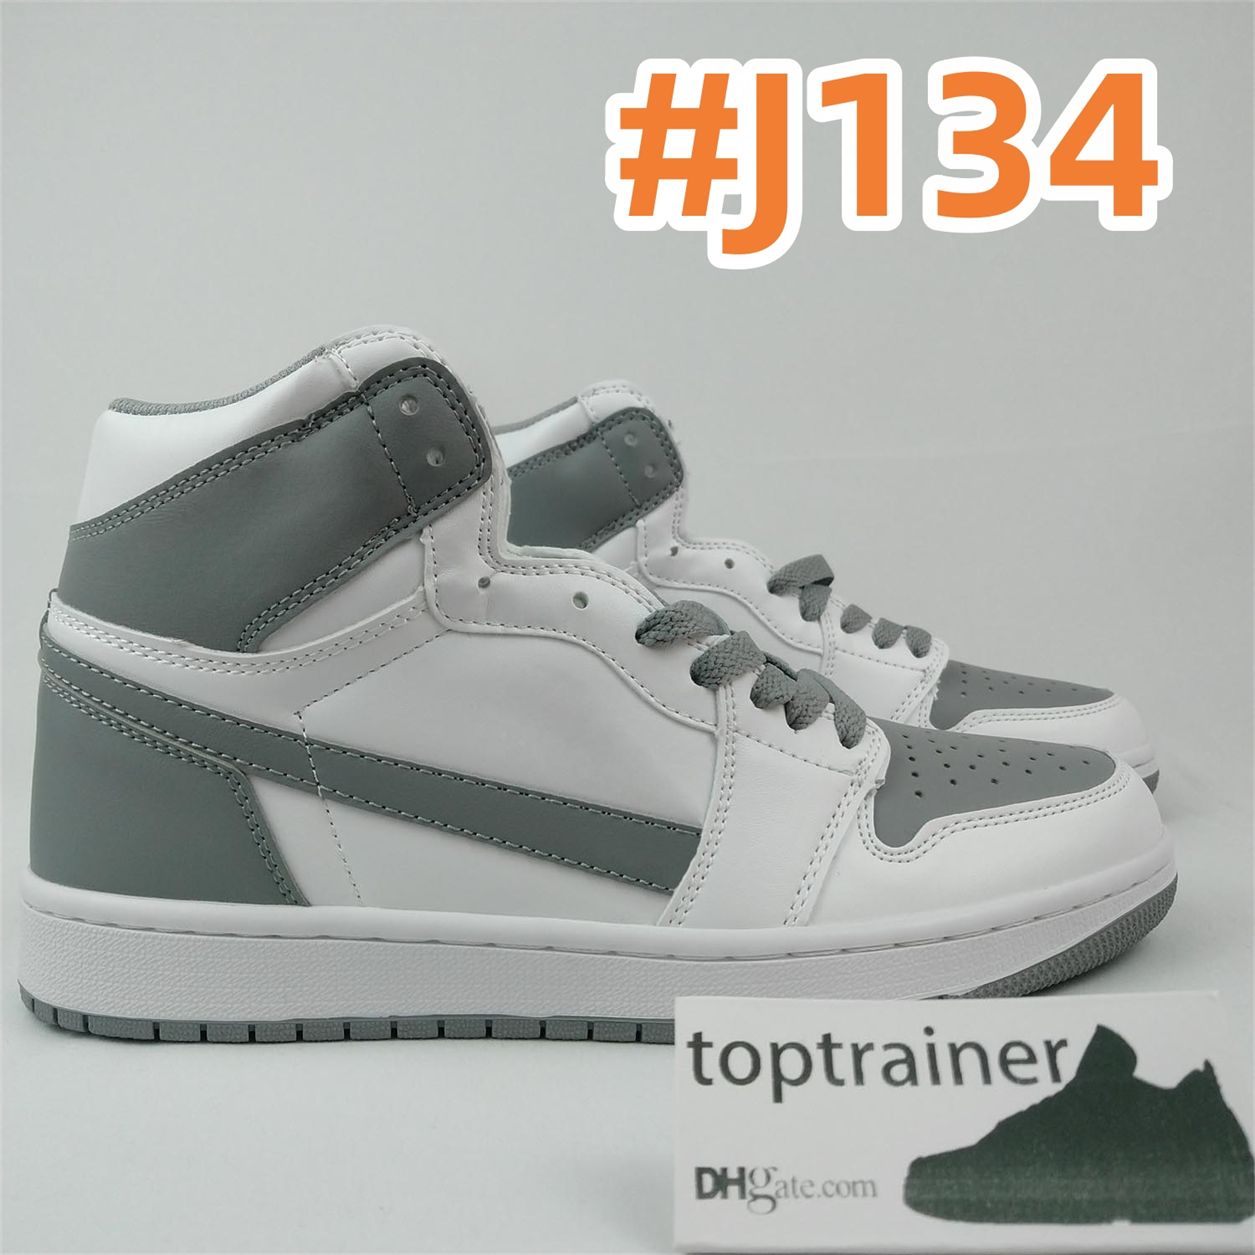 #J134